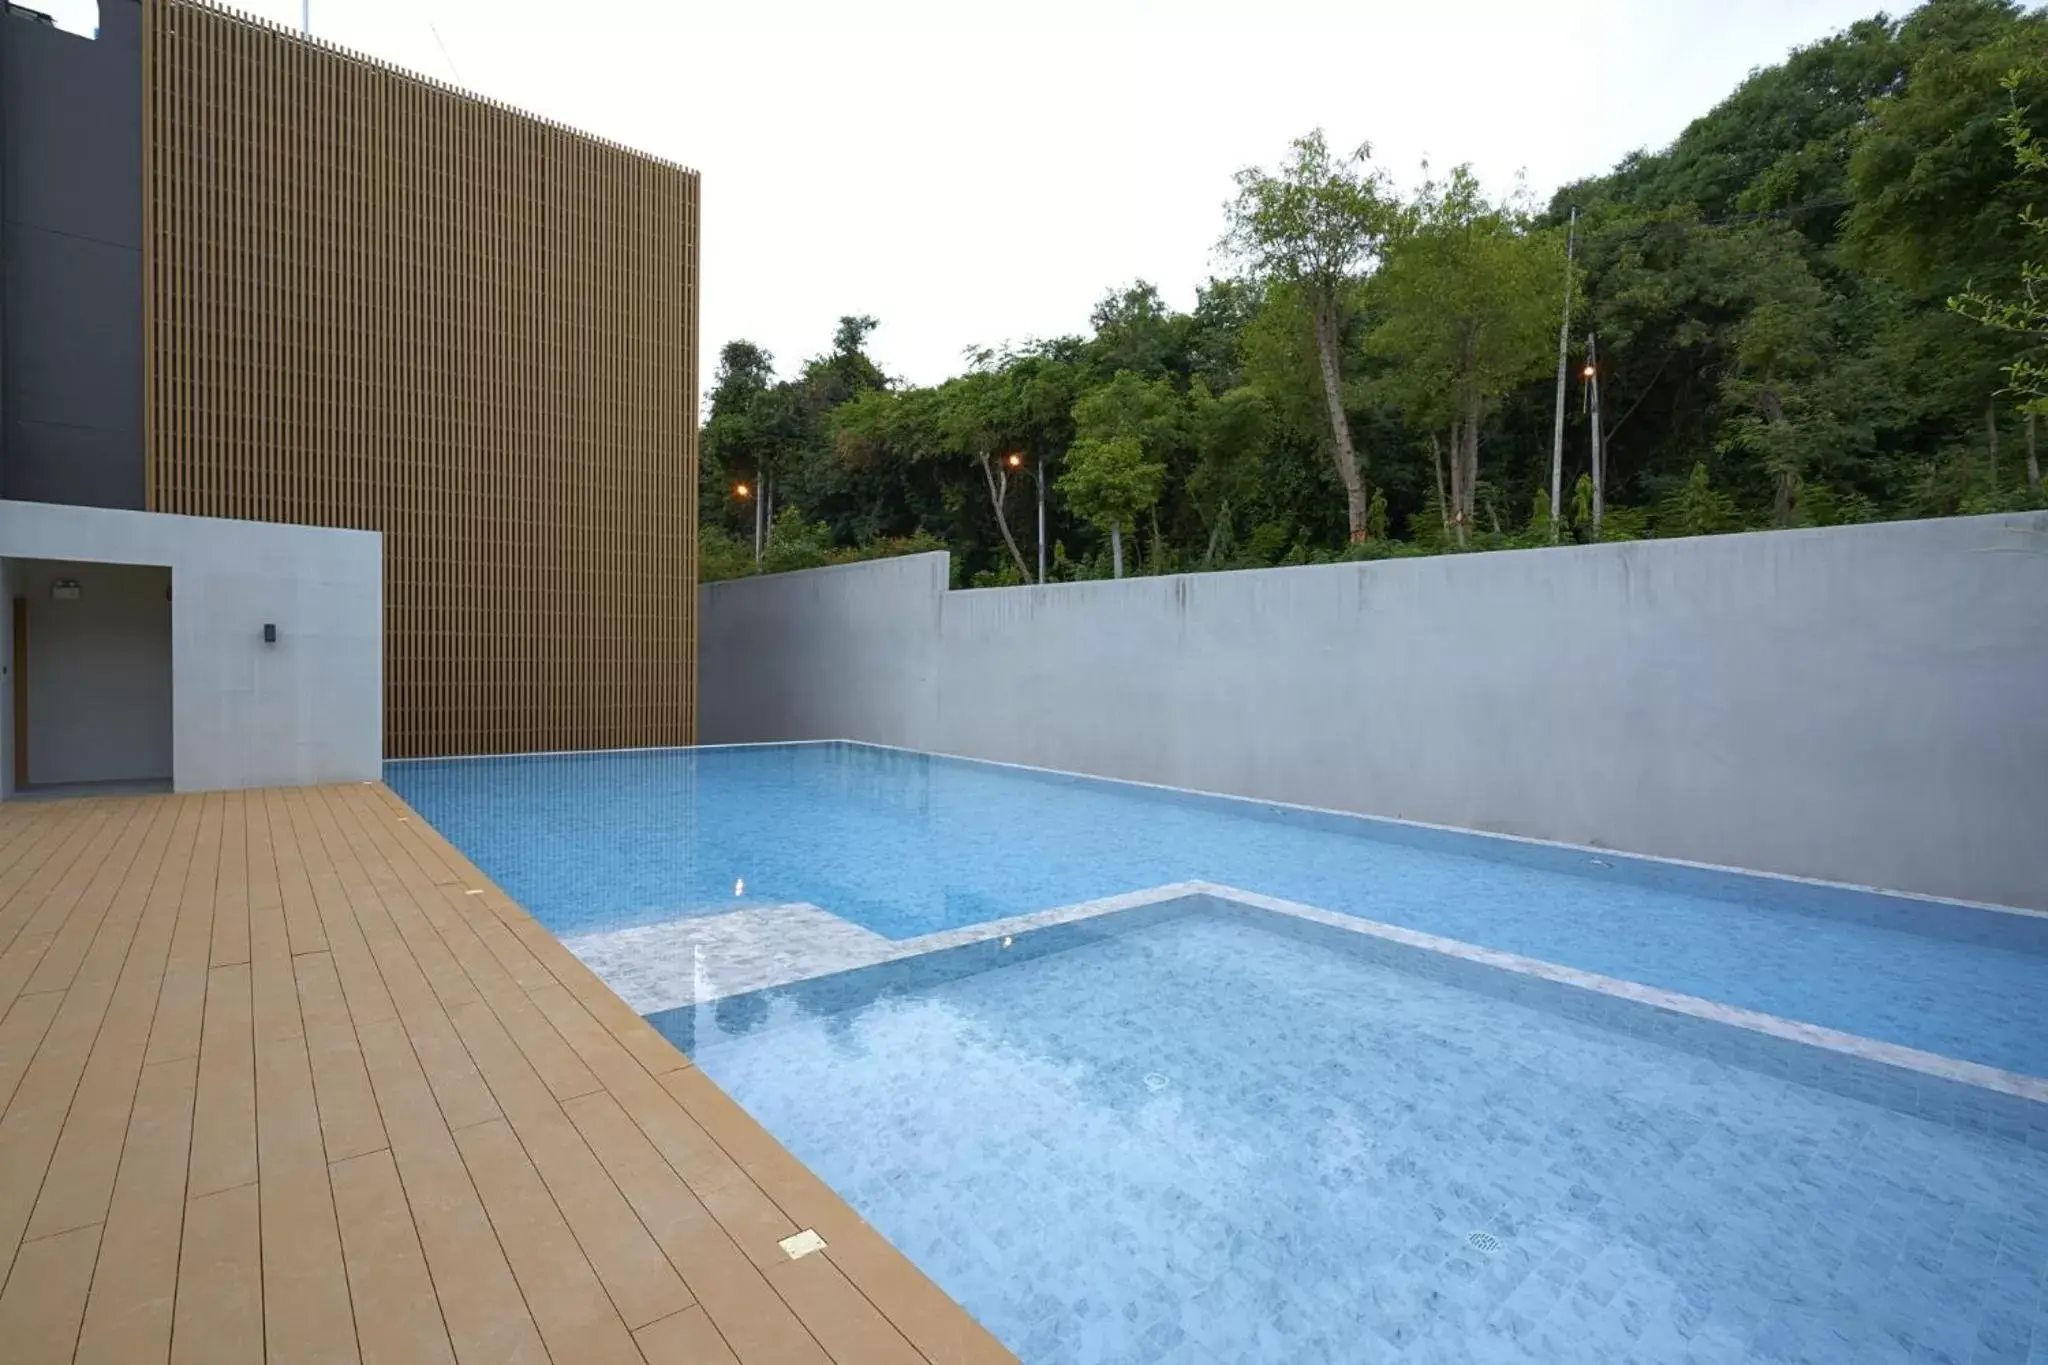 Swimming Pool in Has Pattaya